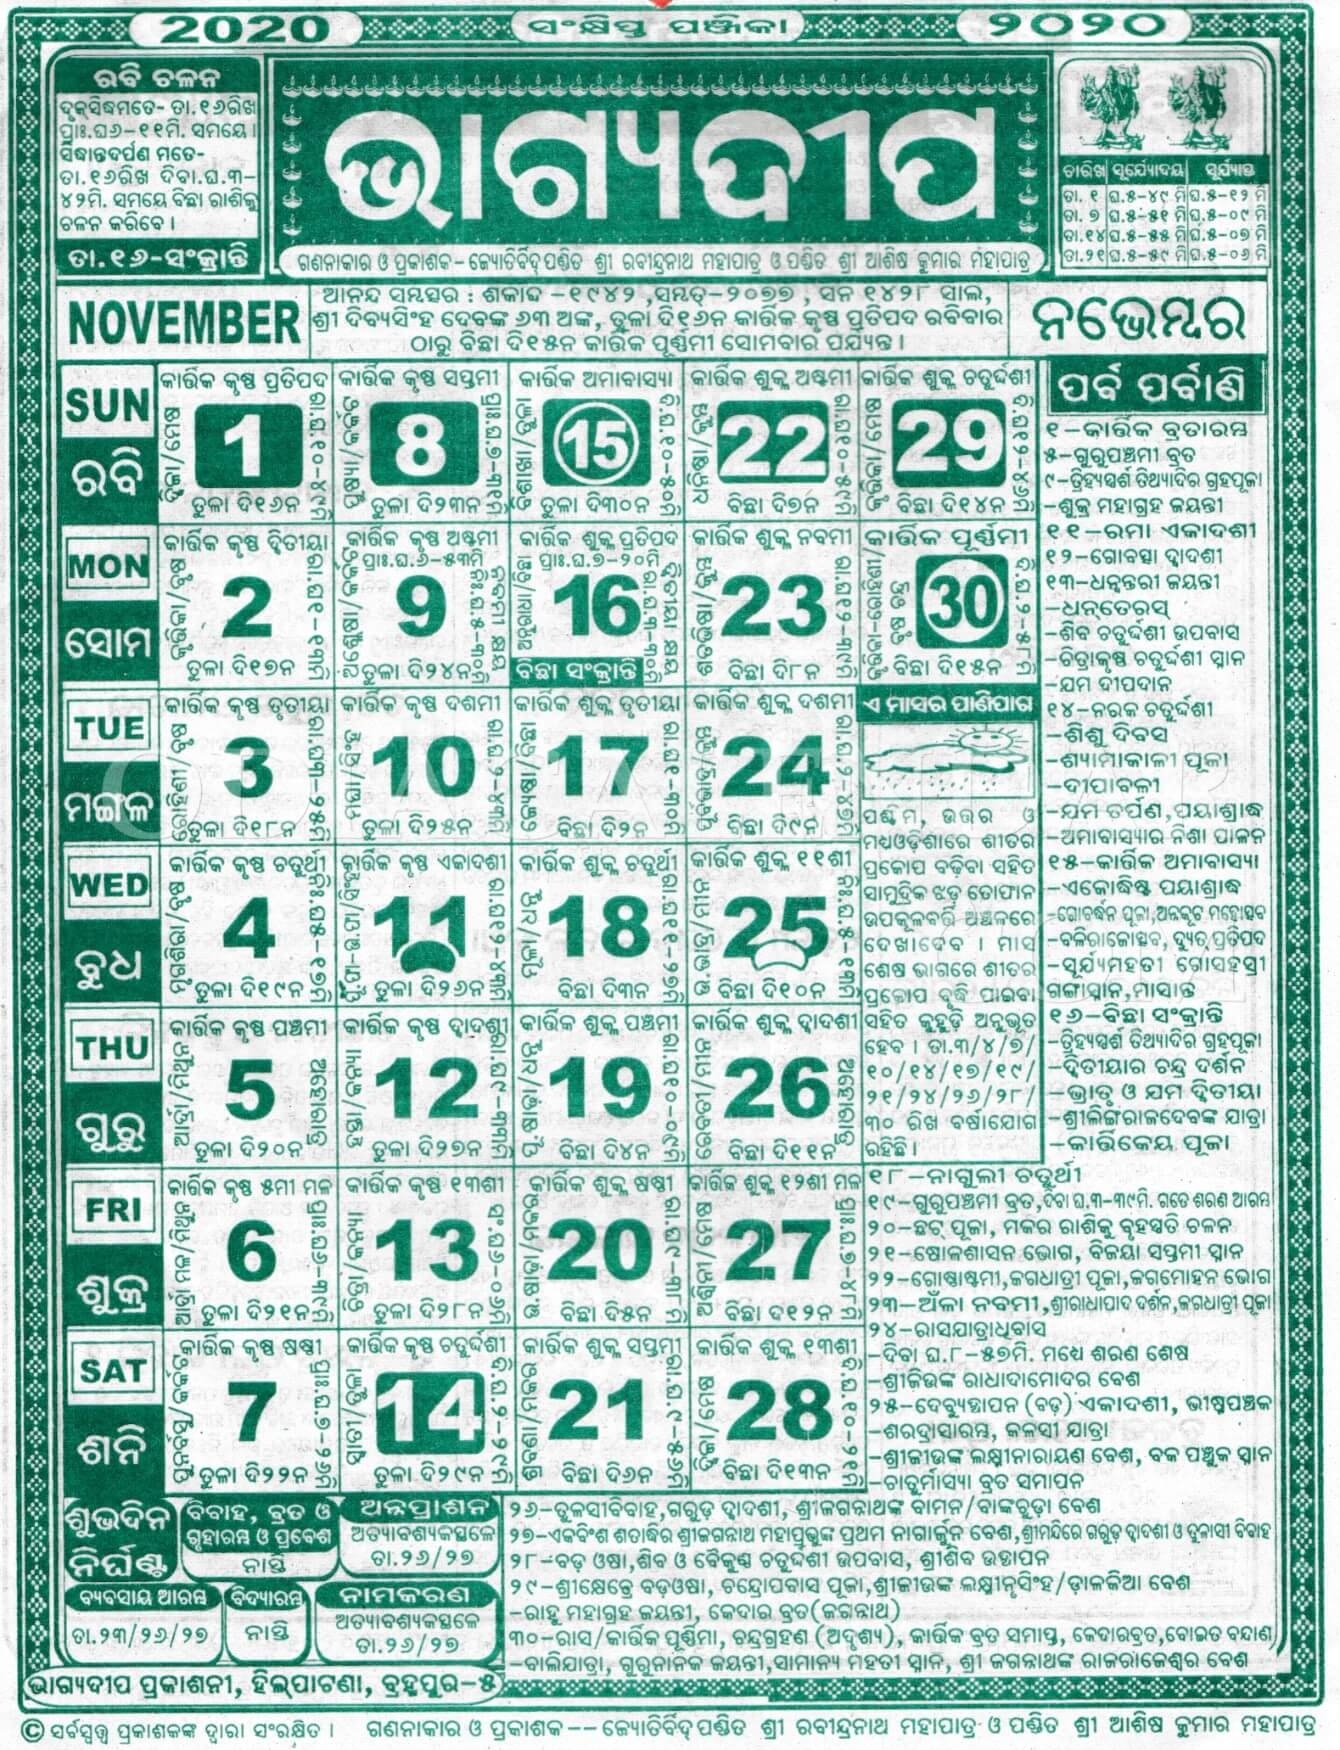 Bhagyadeep Odia Calendar November 2020 - Download Hd Quality Kohinoor Calendar 2021 August